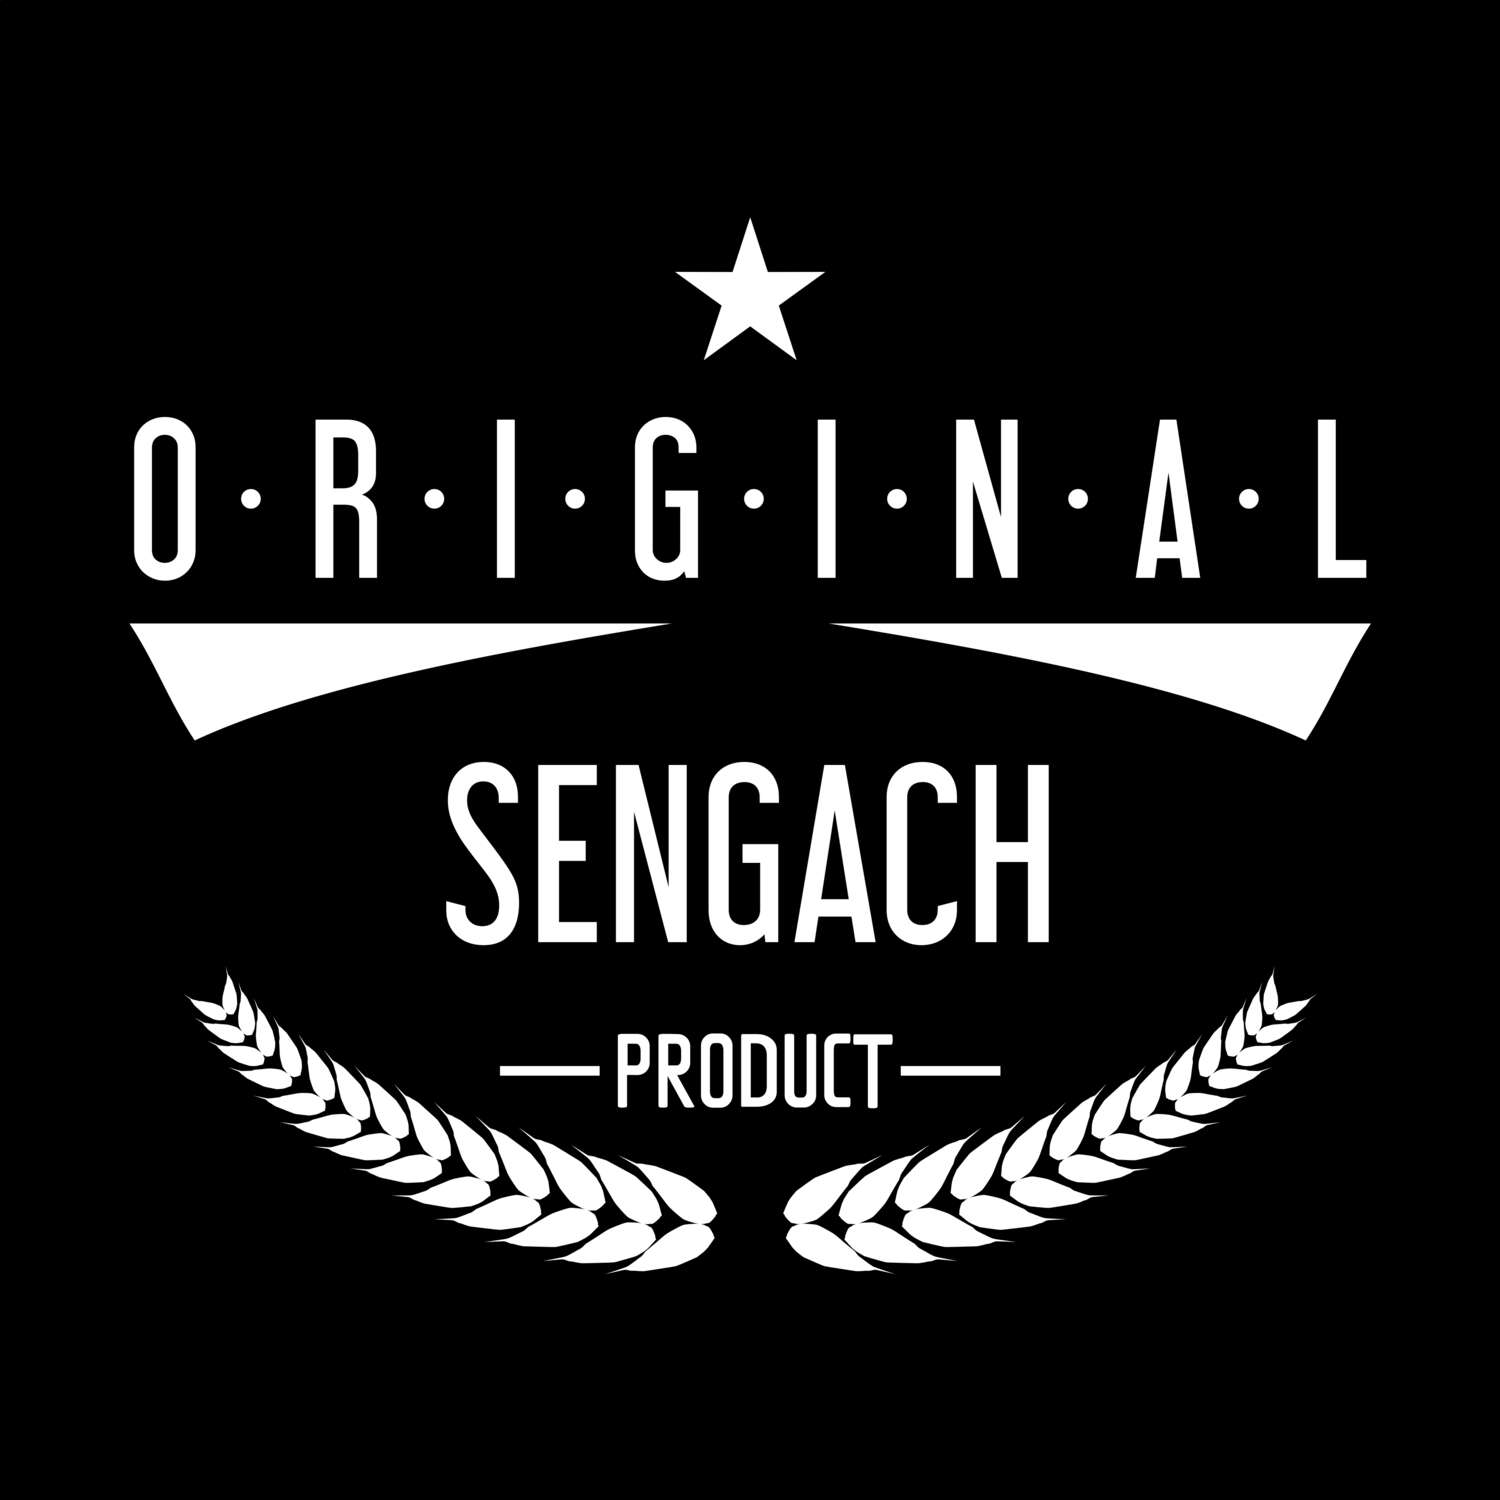 Sengach T-Shirt »Original Product«